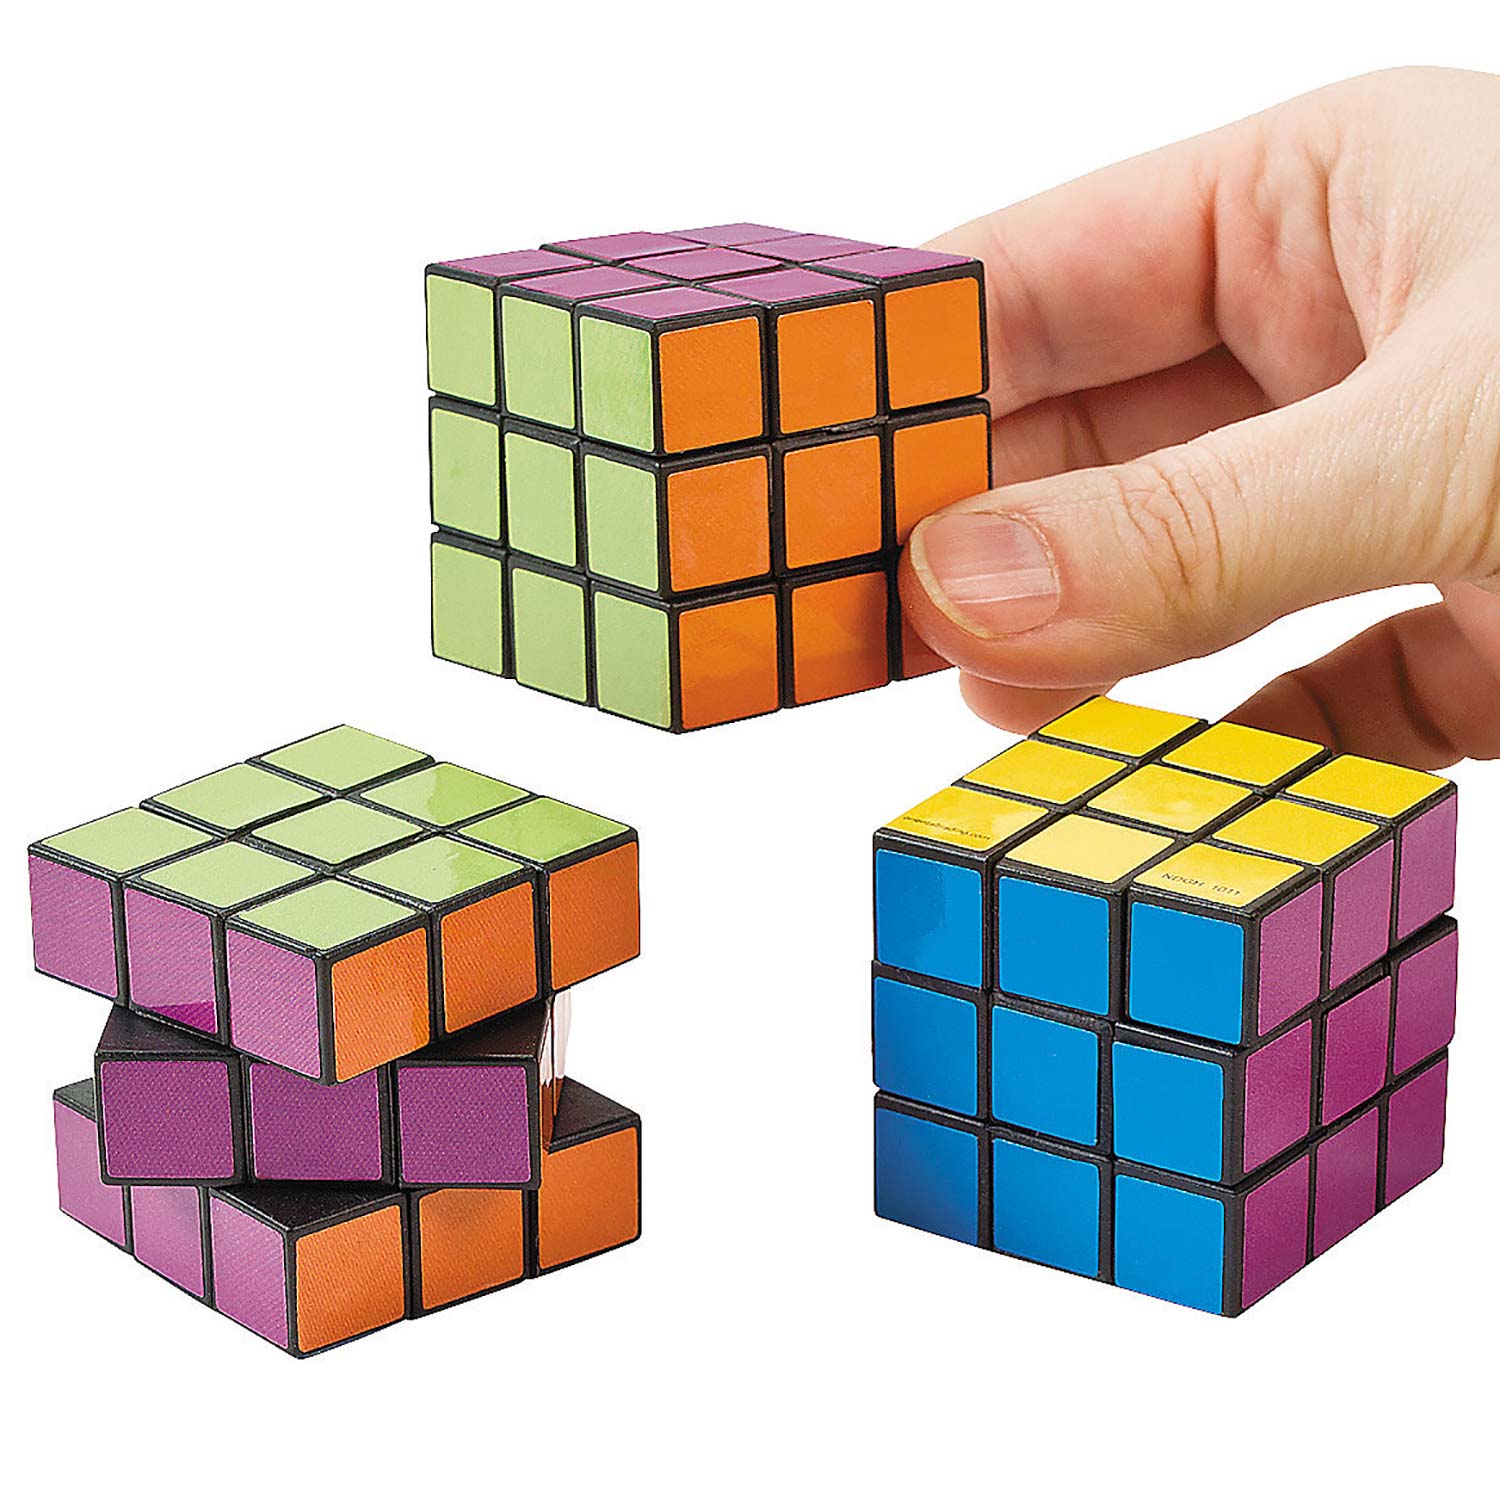 Cube fun. Кубик. Кубик рубик без фона. Детские кубики. Игрушки кубики рубики.